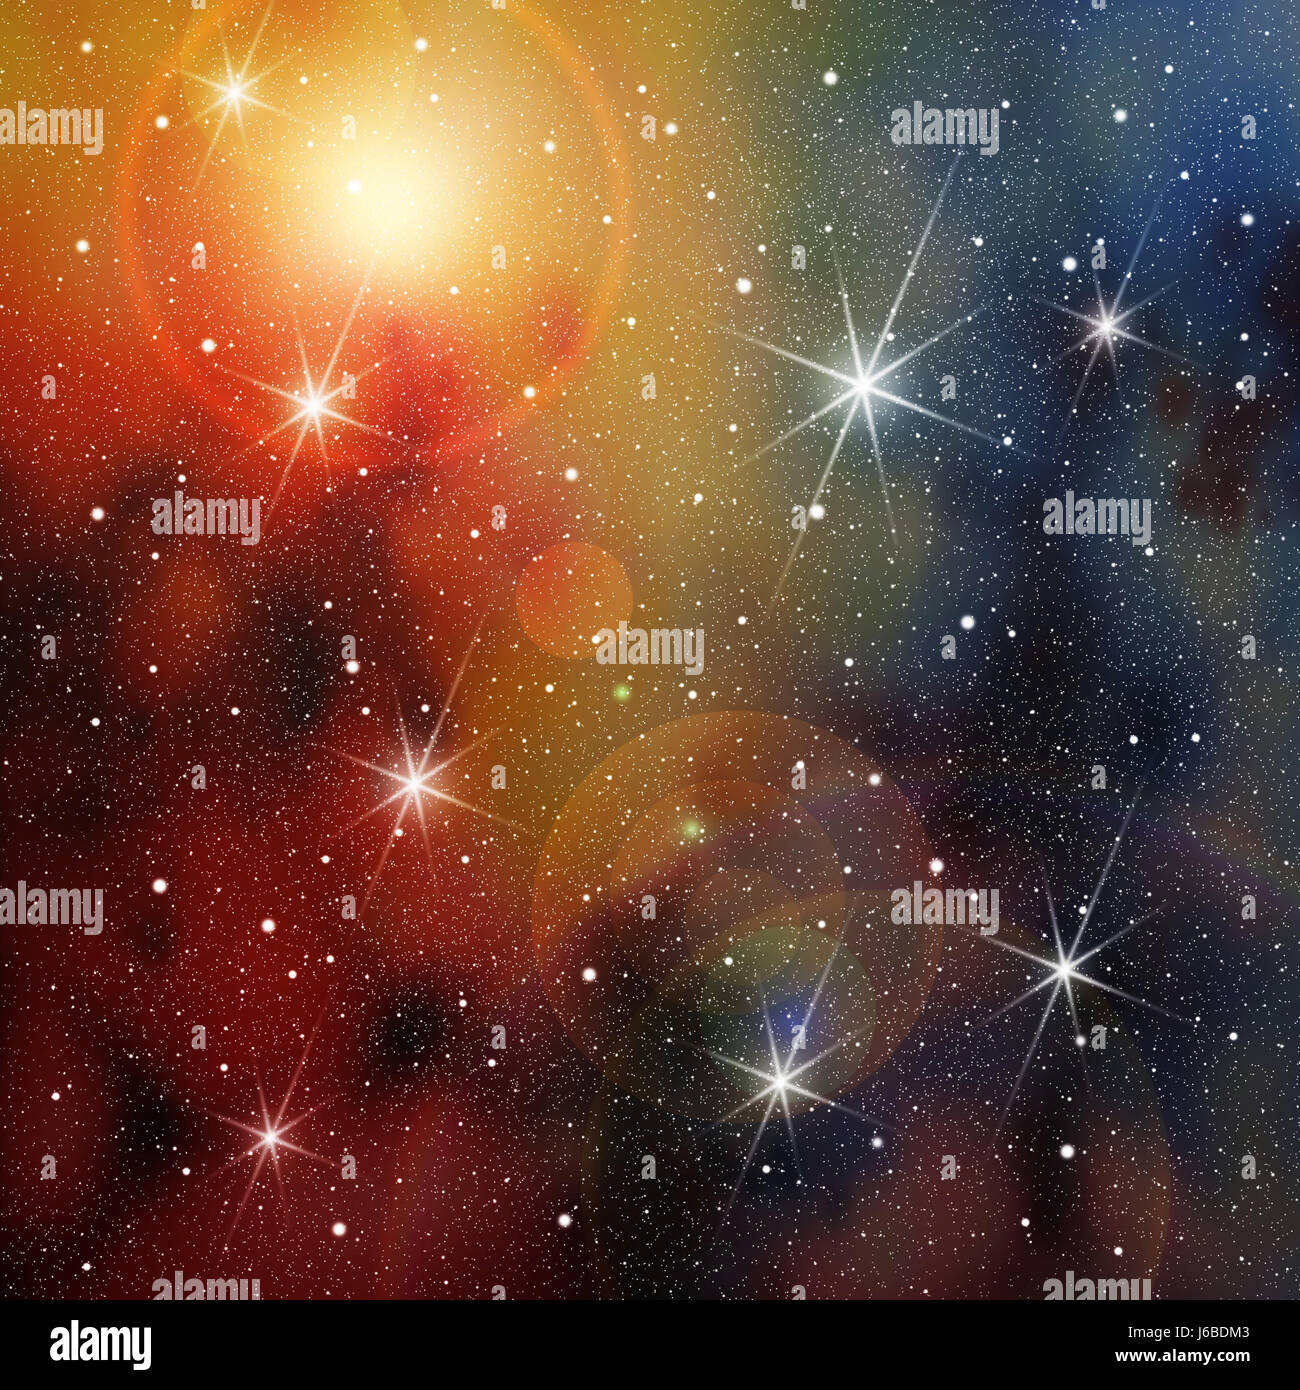 universe star heavenly body celestial body fixed star backdrop background blue Stock Photo